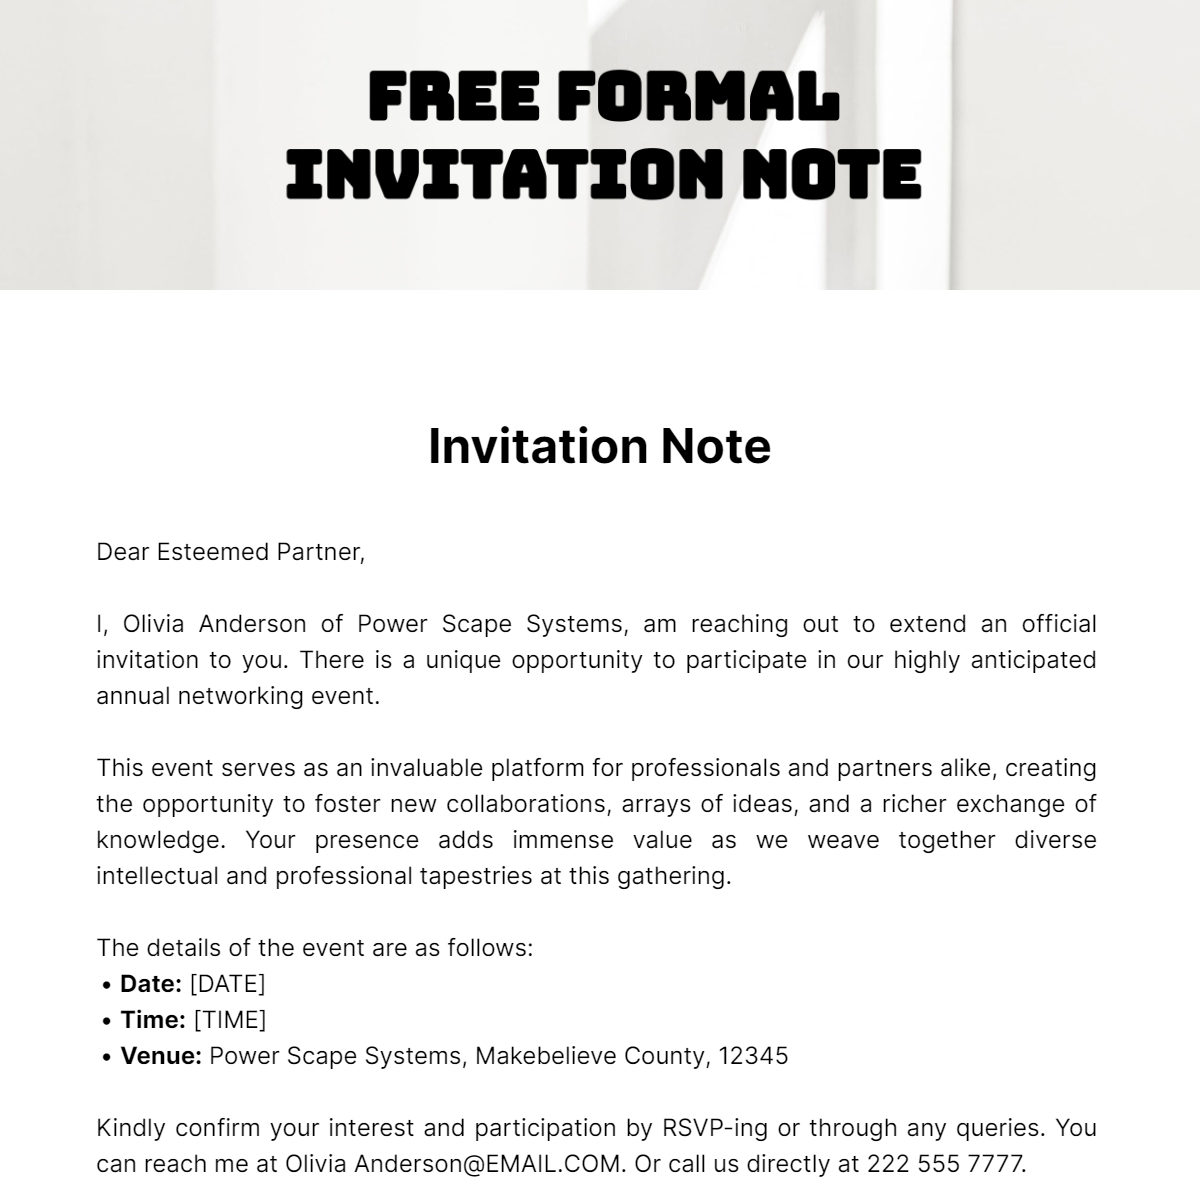 Formal Invitation Note Template